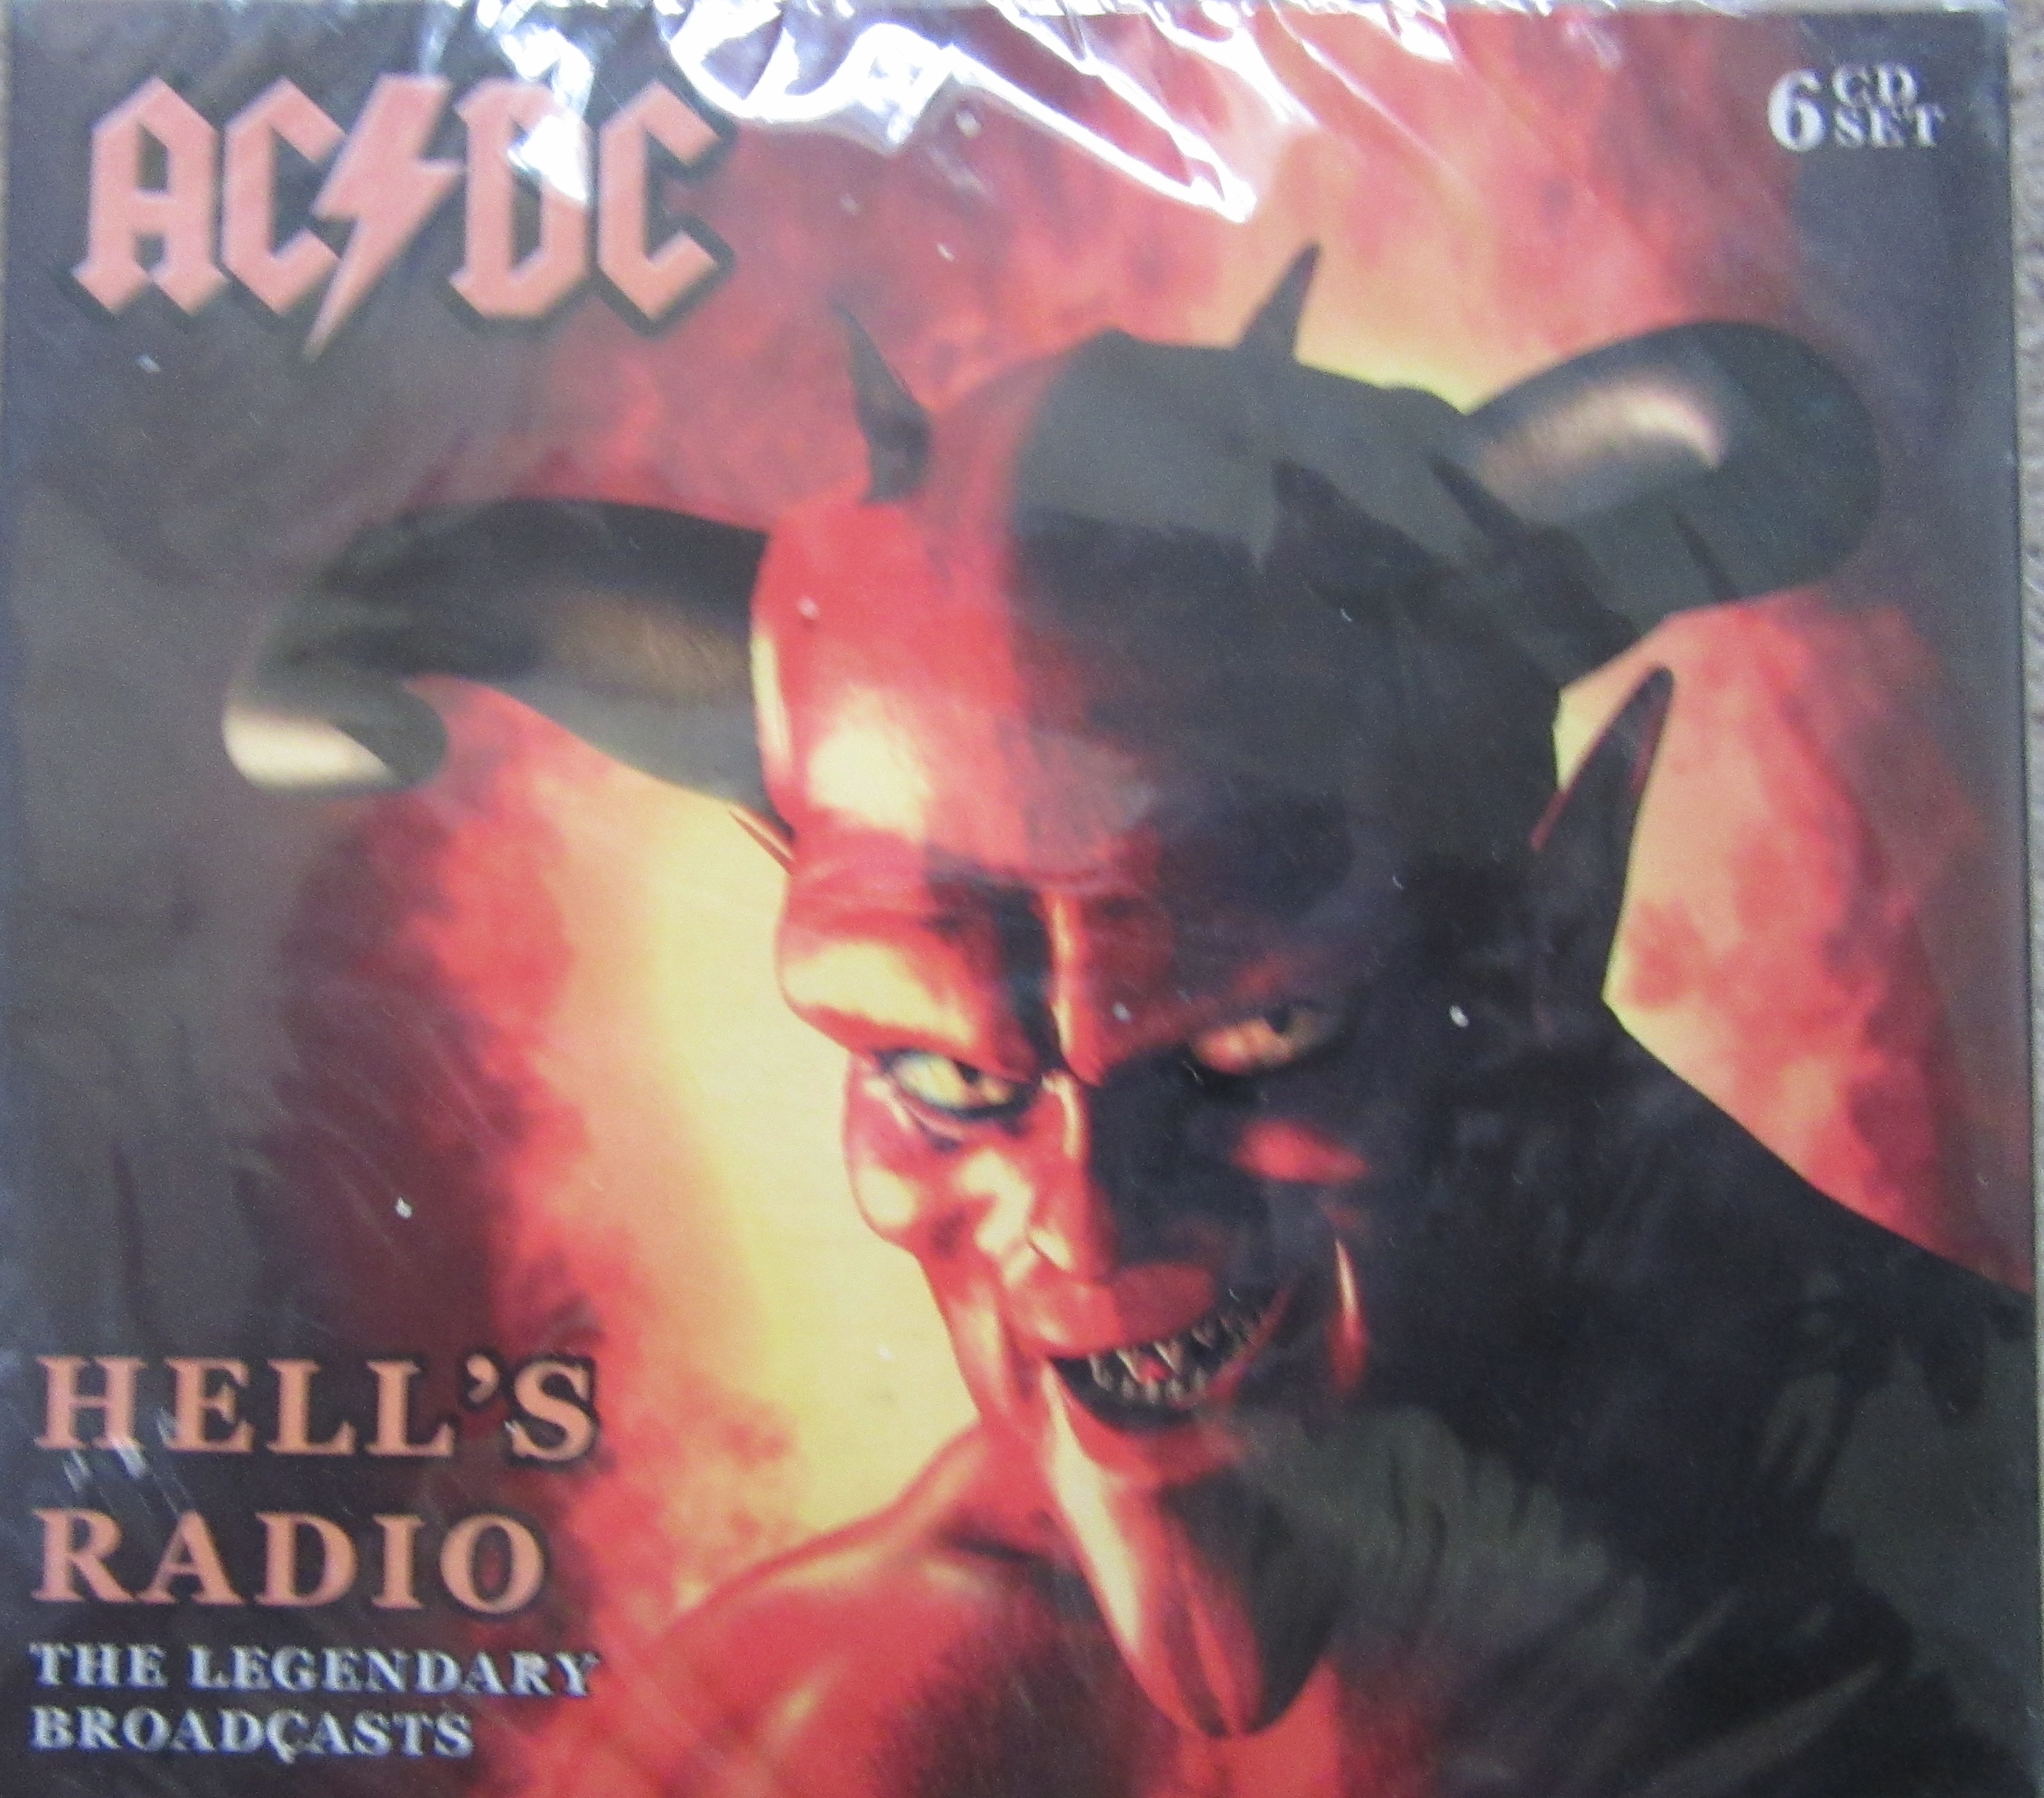 MUSIC - AC/DC HELL'S RADIO 6 CD'S BOXED SET